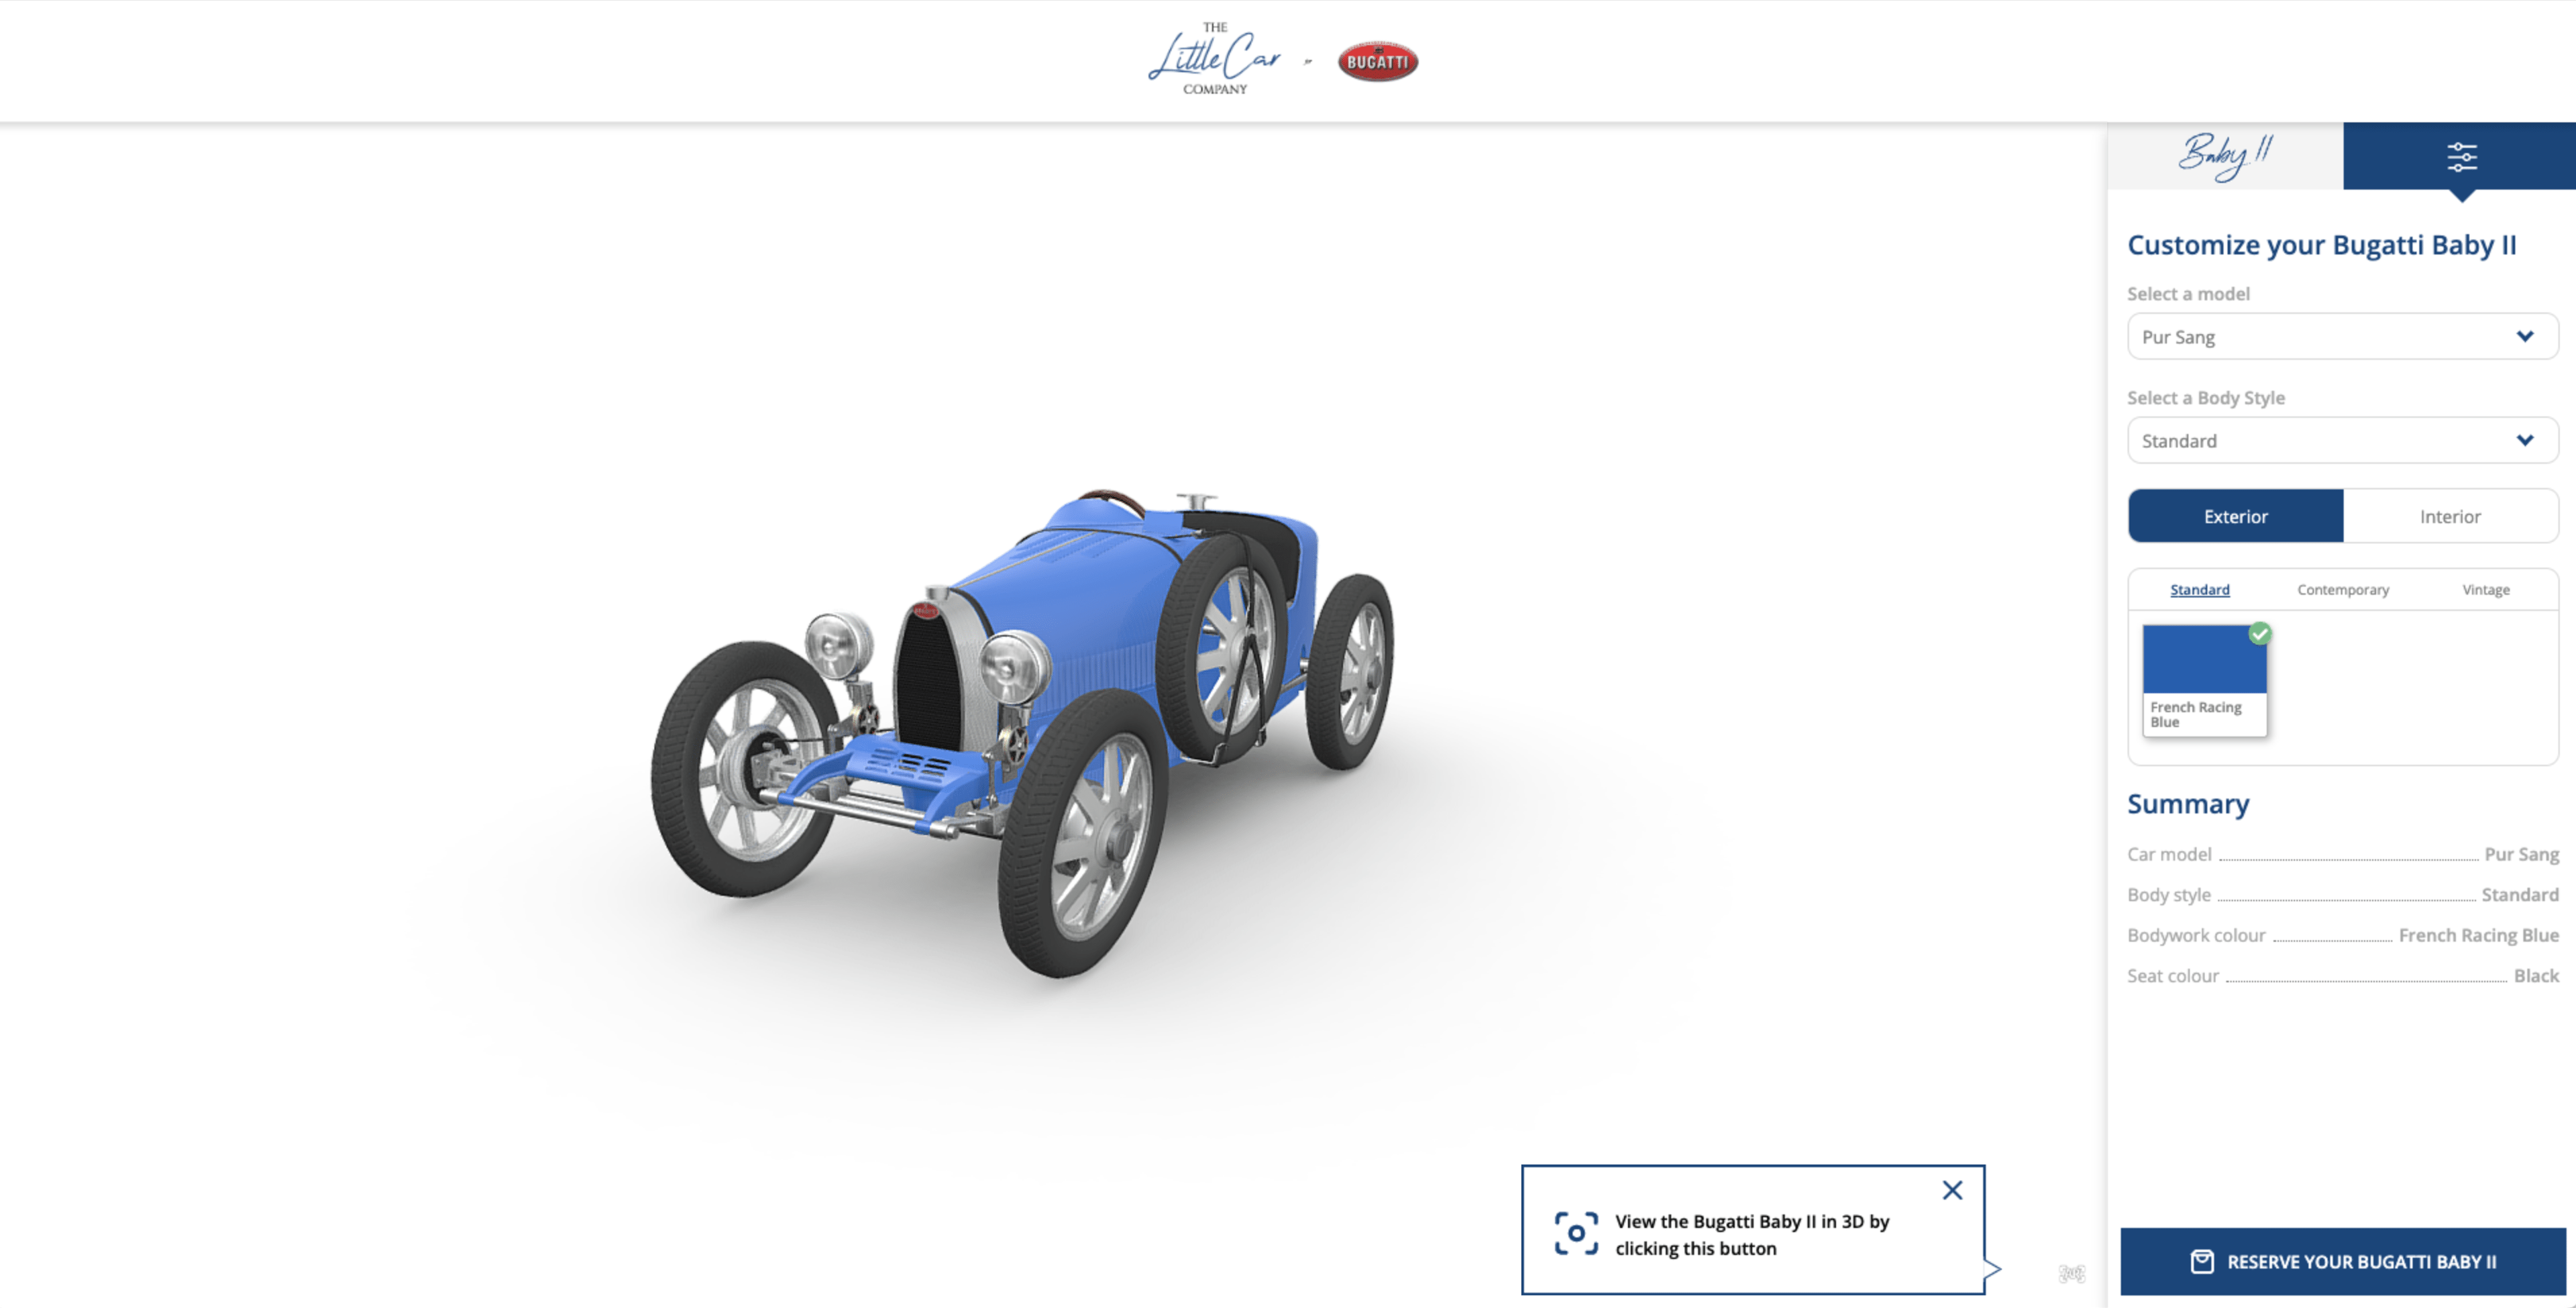 Bespoke Bugatti brought to life: The Little Car Company launches cutting-edge Bugatti Baby II configurator